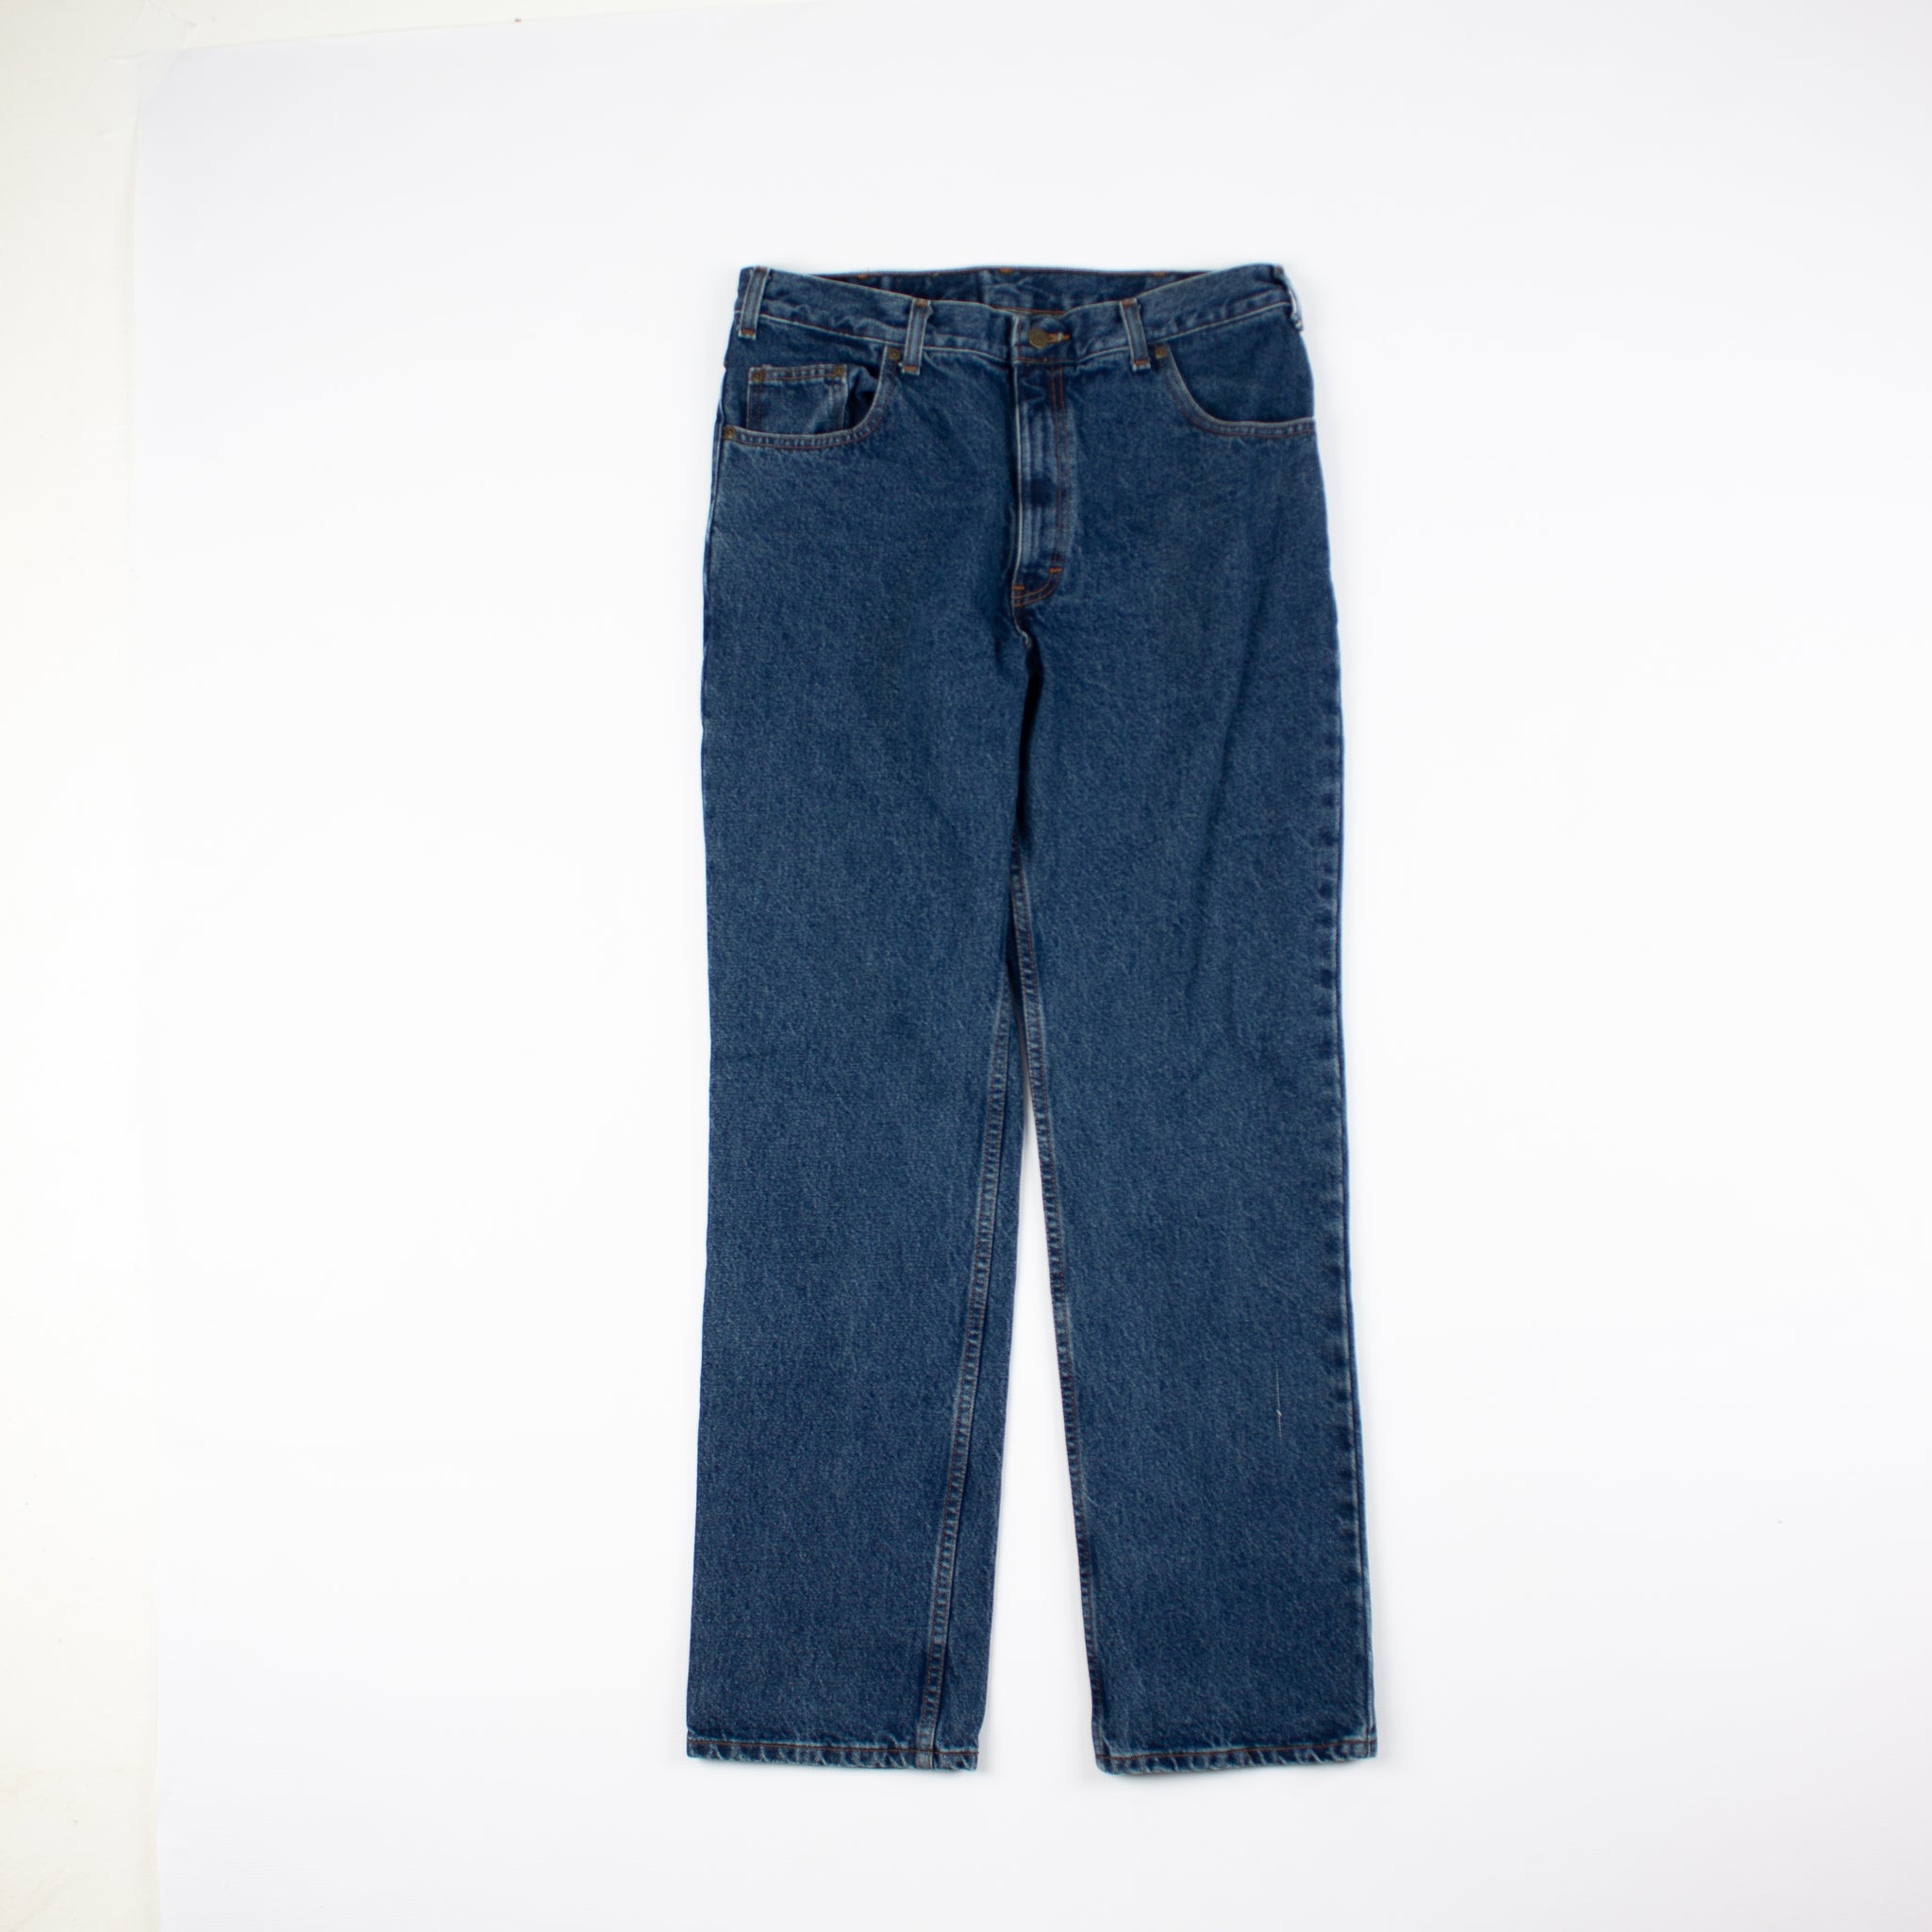 Jeans Blue Bay 34 x 32 Vintage